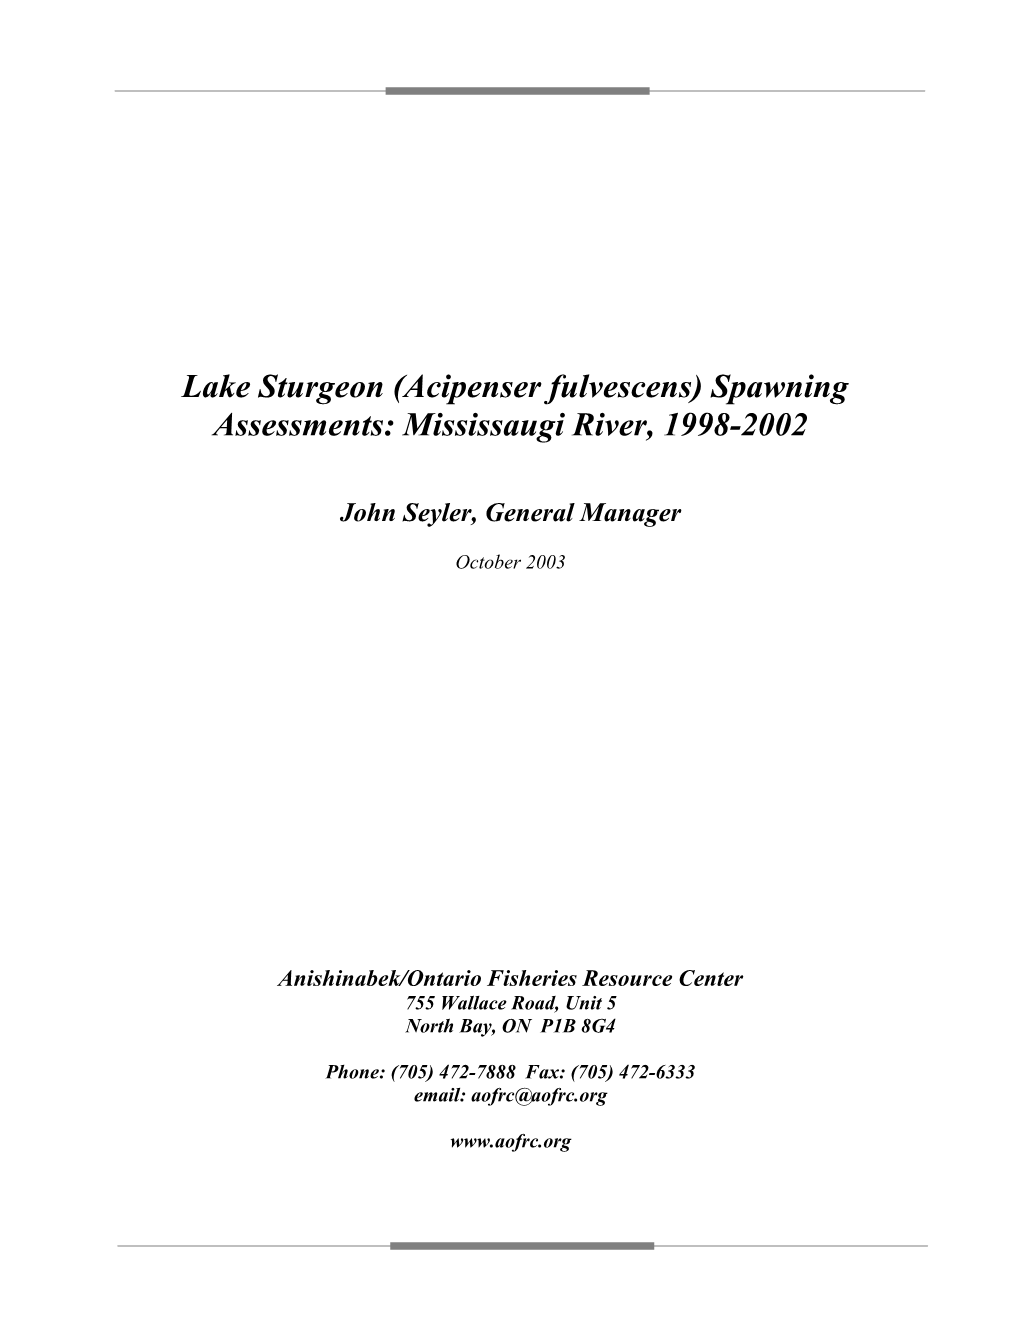 Lake Sturgeon (Acipenser Fulvescens) Spawning Assessments: Mississaugi River, 1998-2002